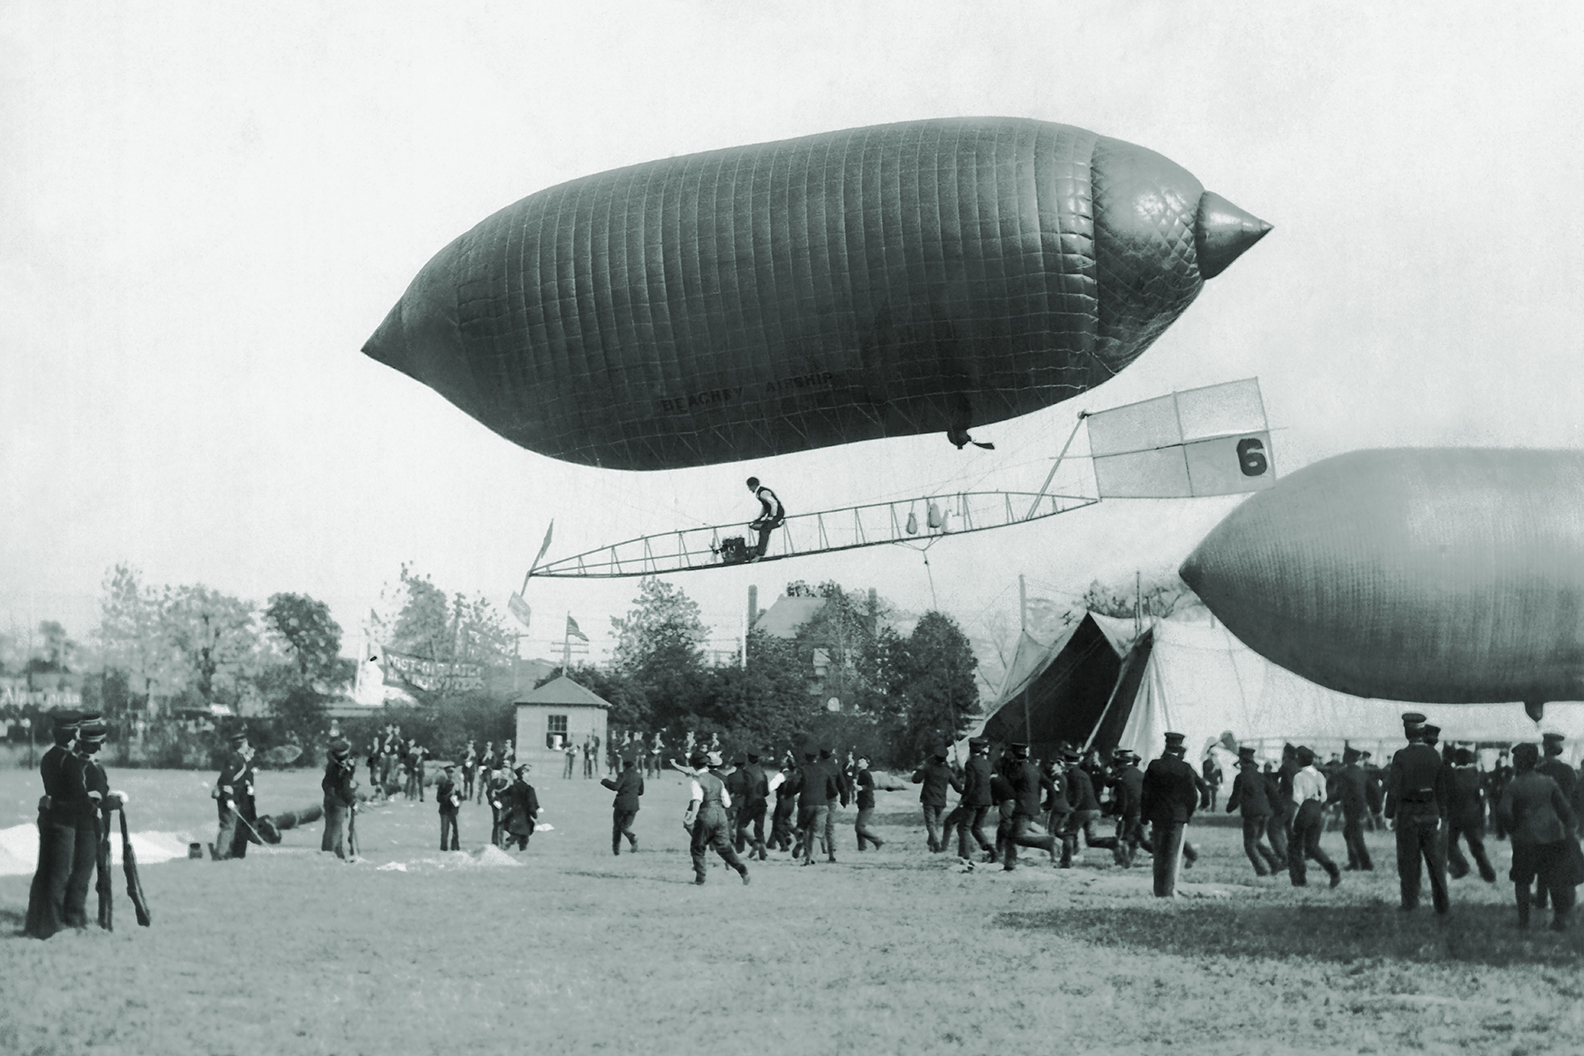 Man Flies. The story of Alberto Santos-Dumont Master of the Balloon.